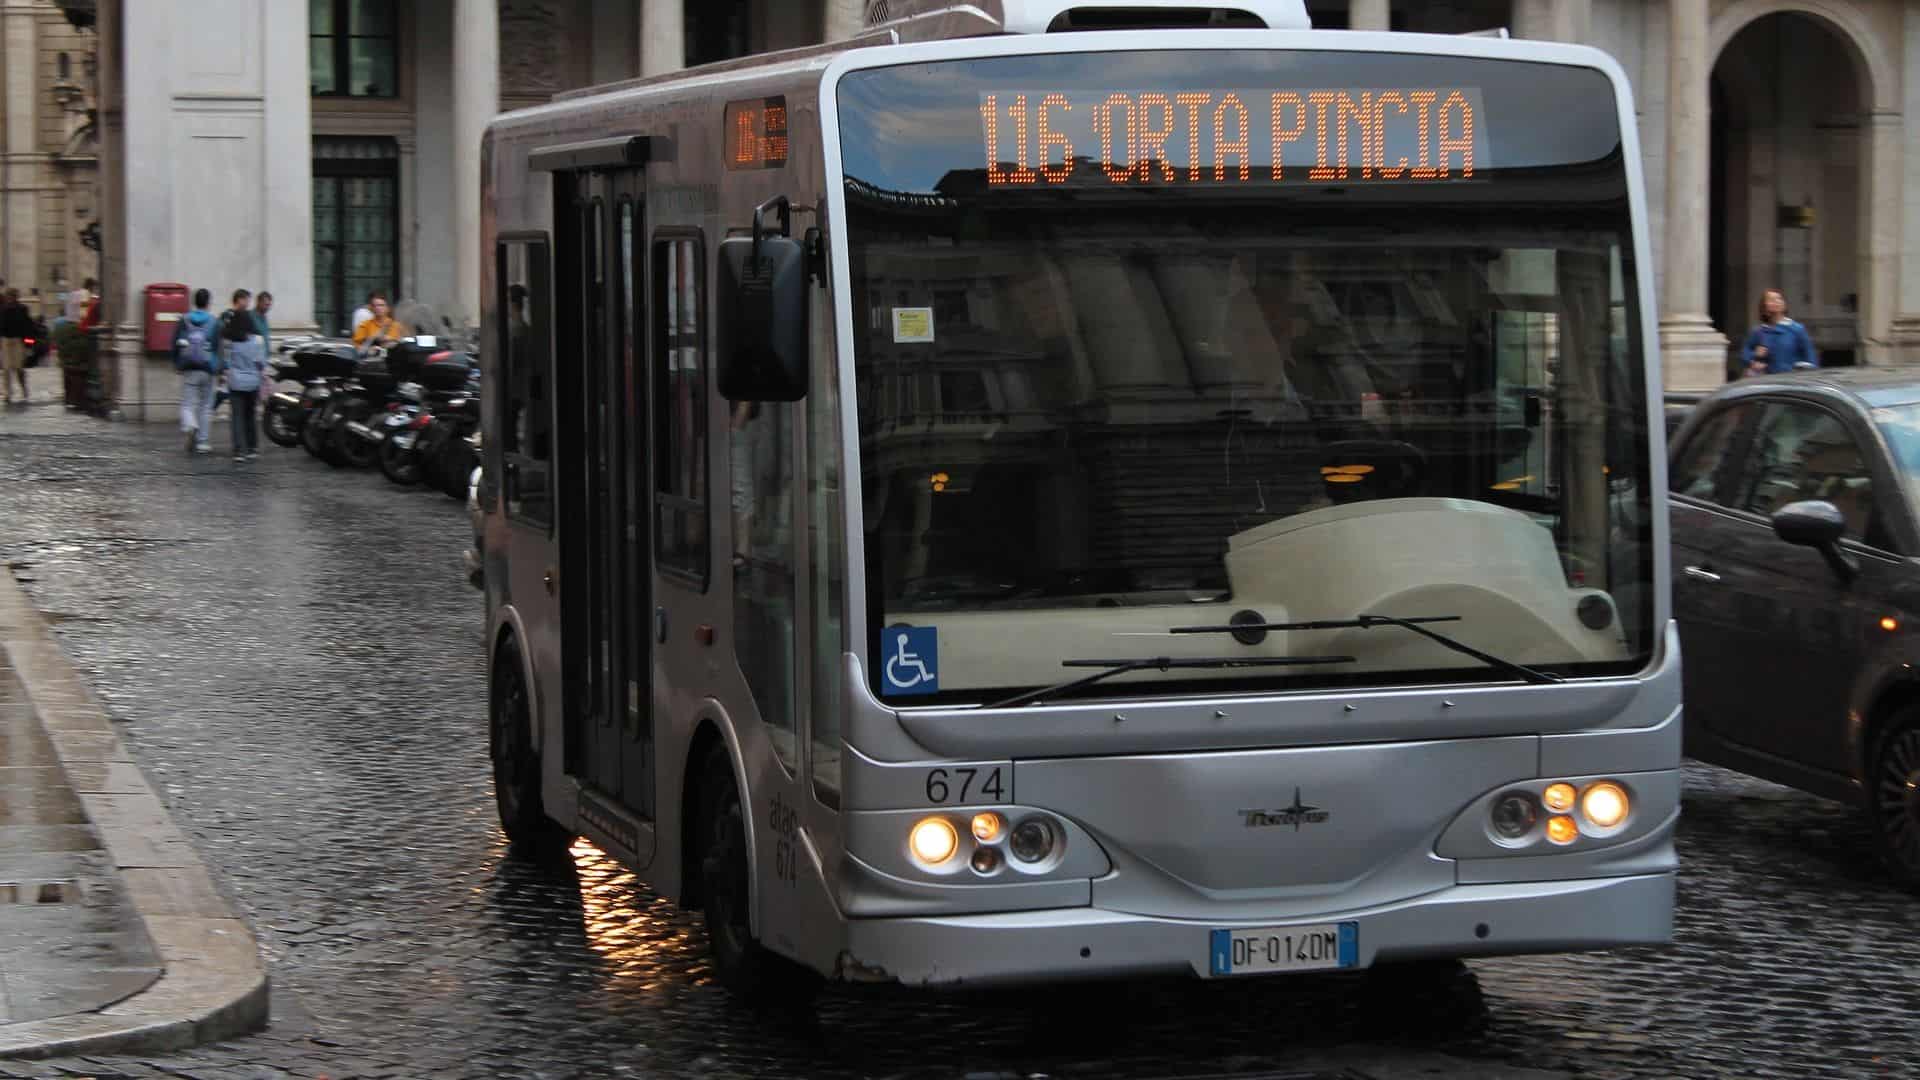 A minibus driving down a street in Rome